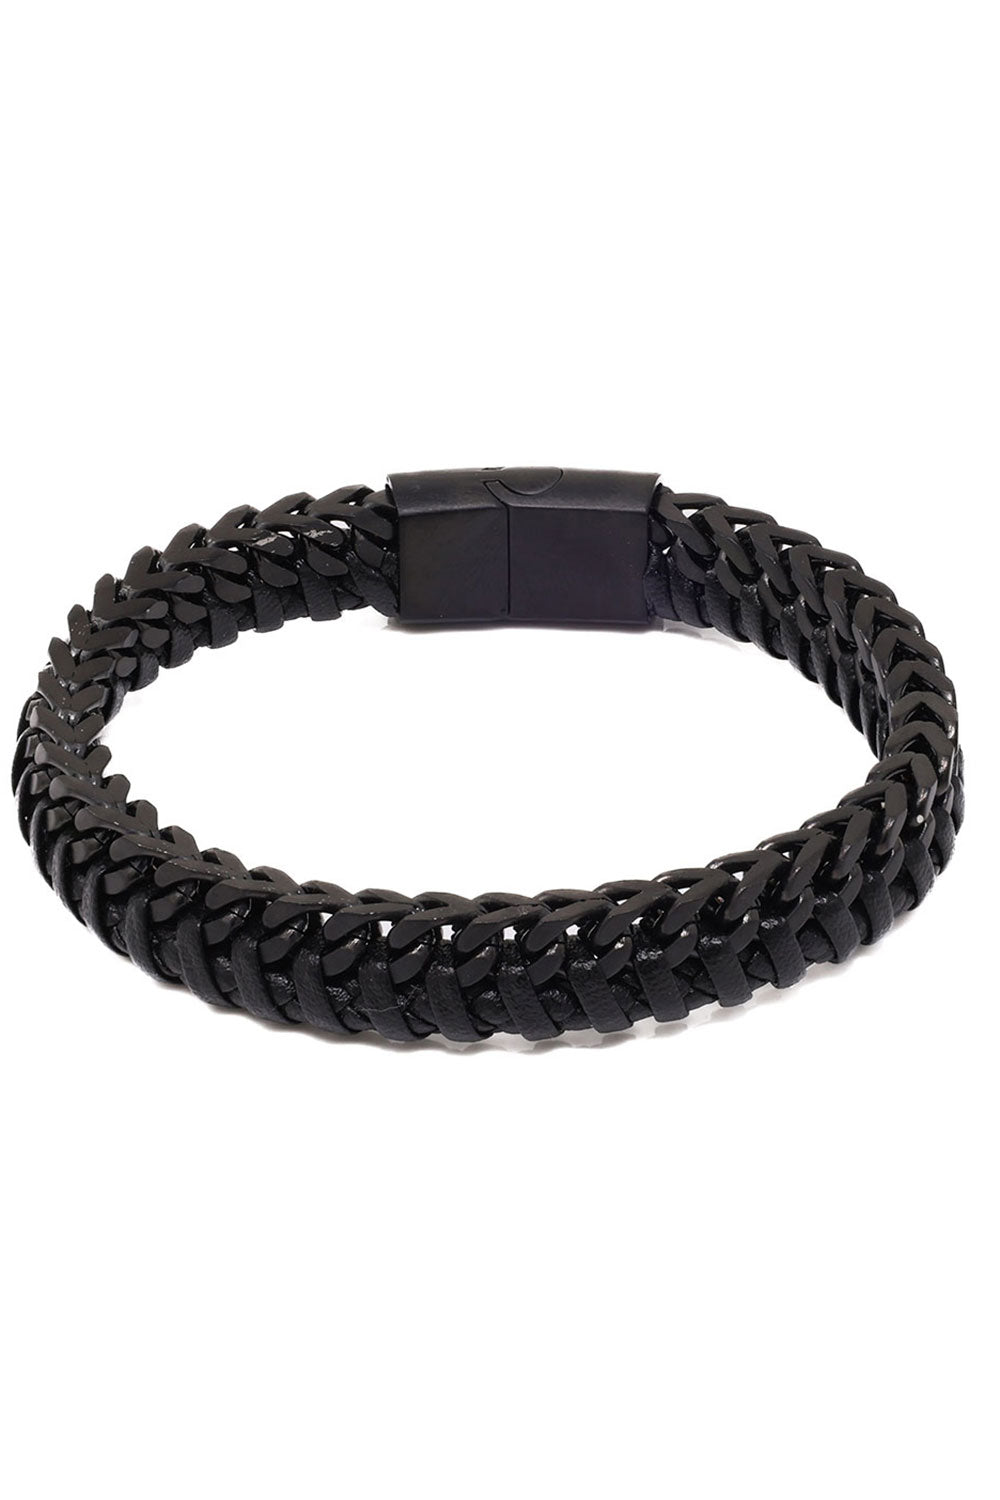 Barabas Unisex Braided Leather Metal Bangle Bracelets 4BMS01 Black Black